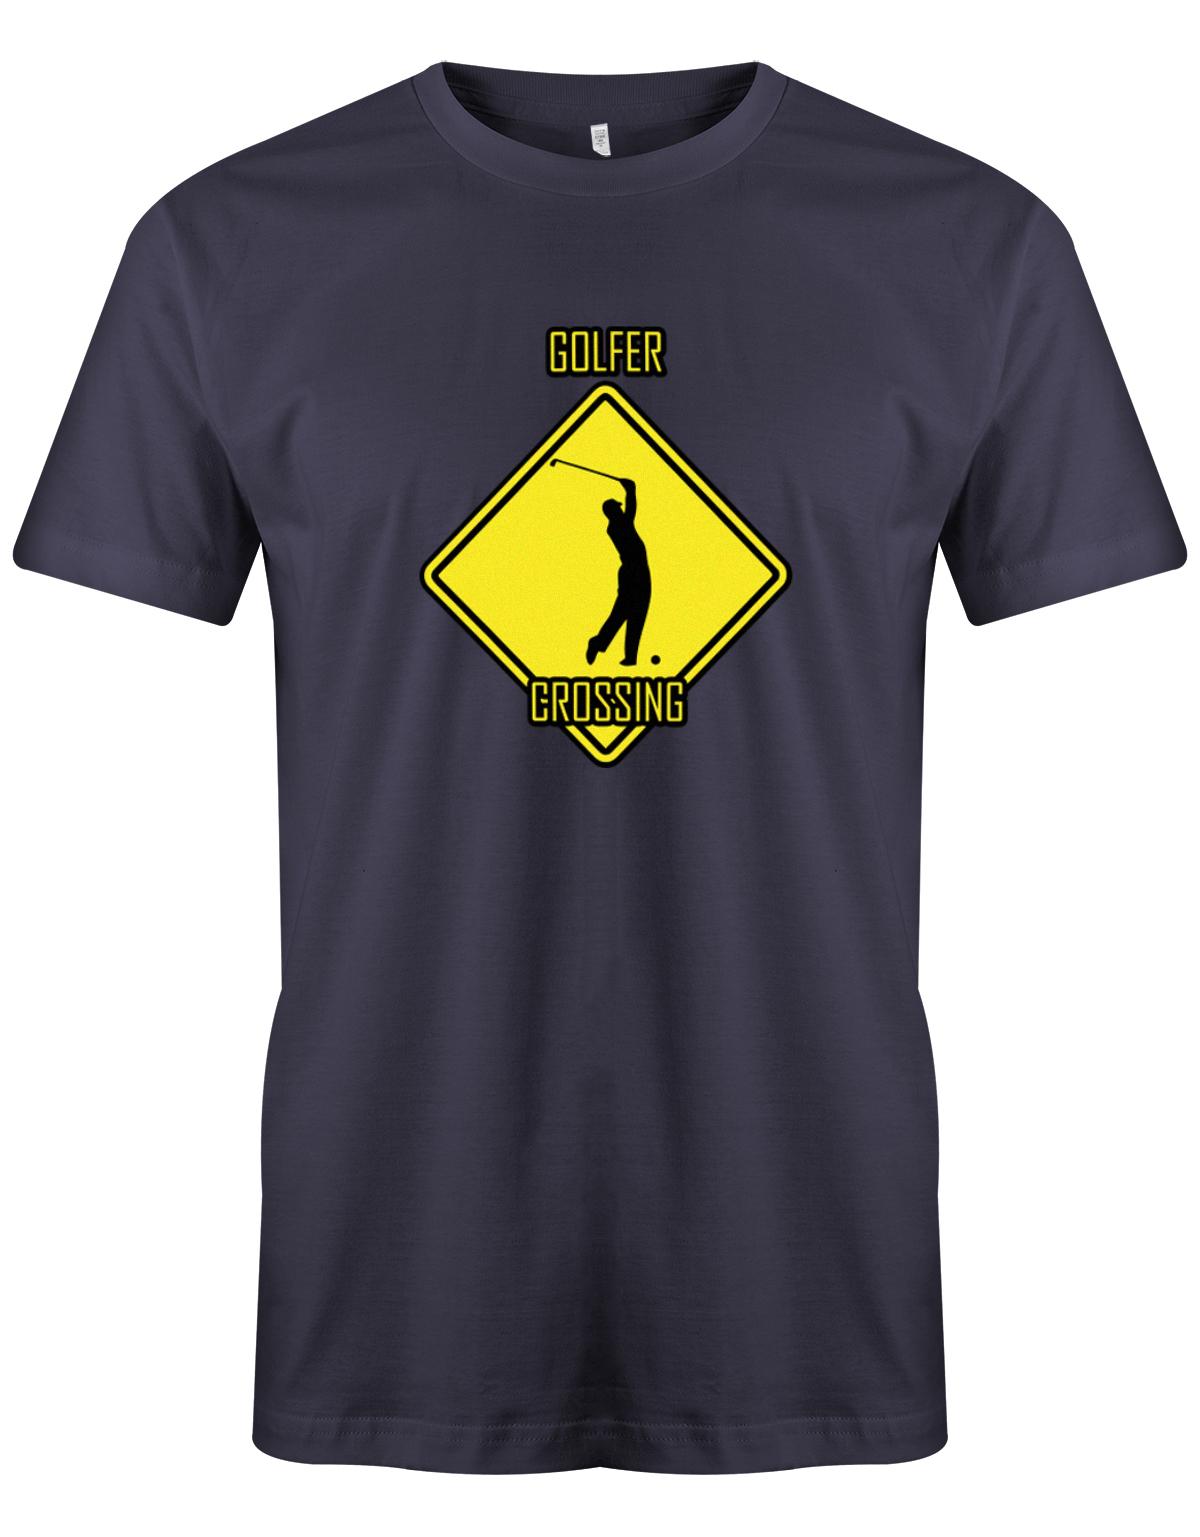 Golfer-Crossing-Herren-Shirt-Navy